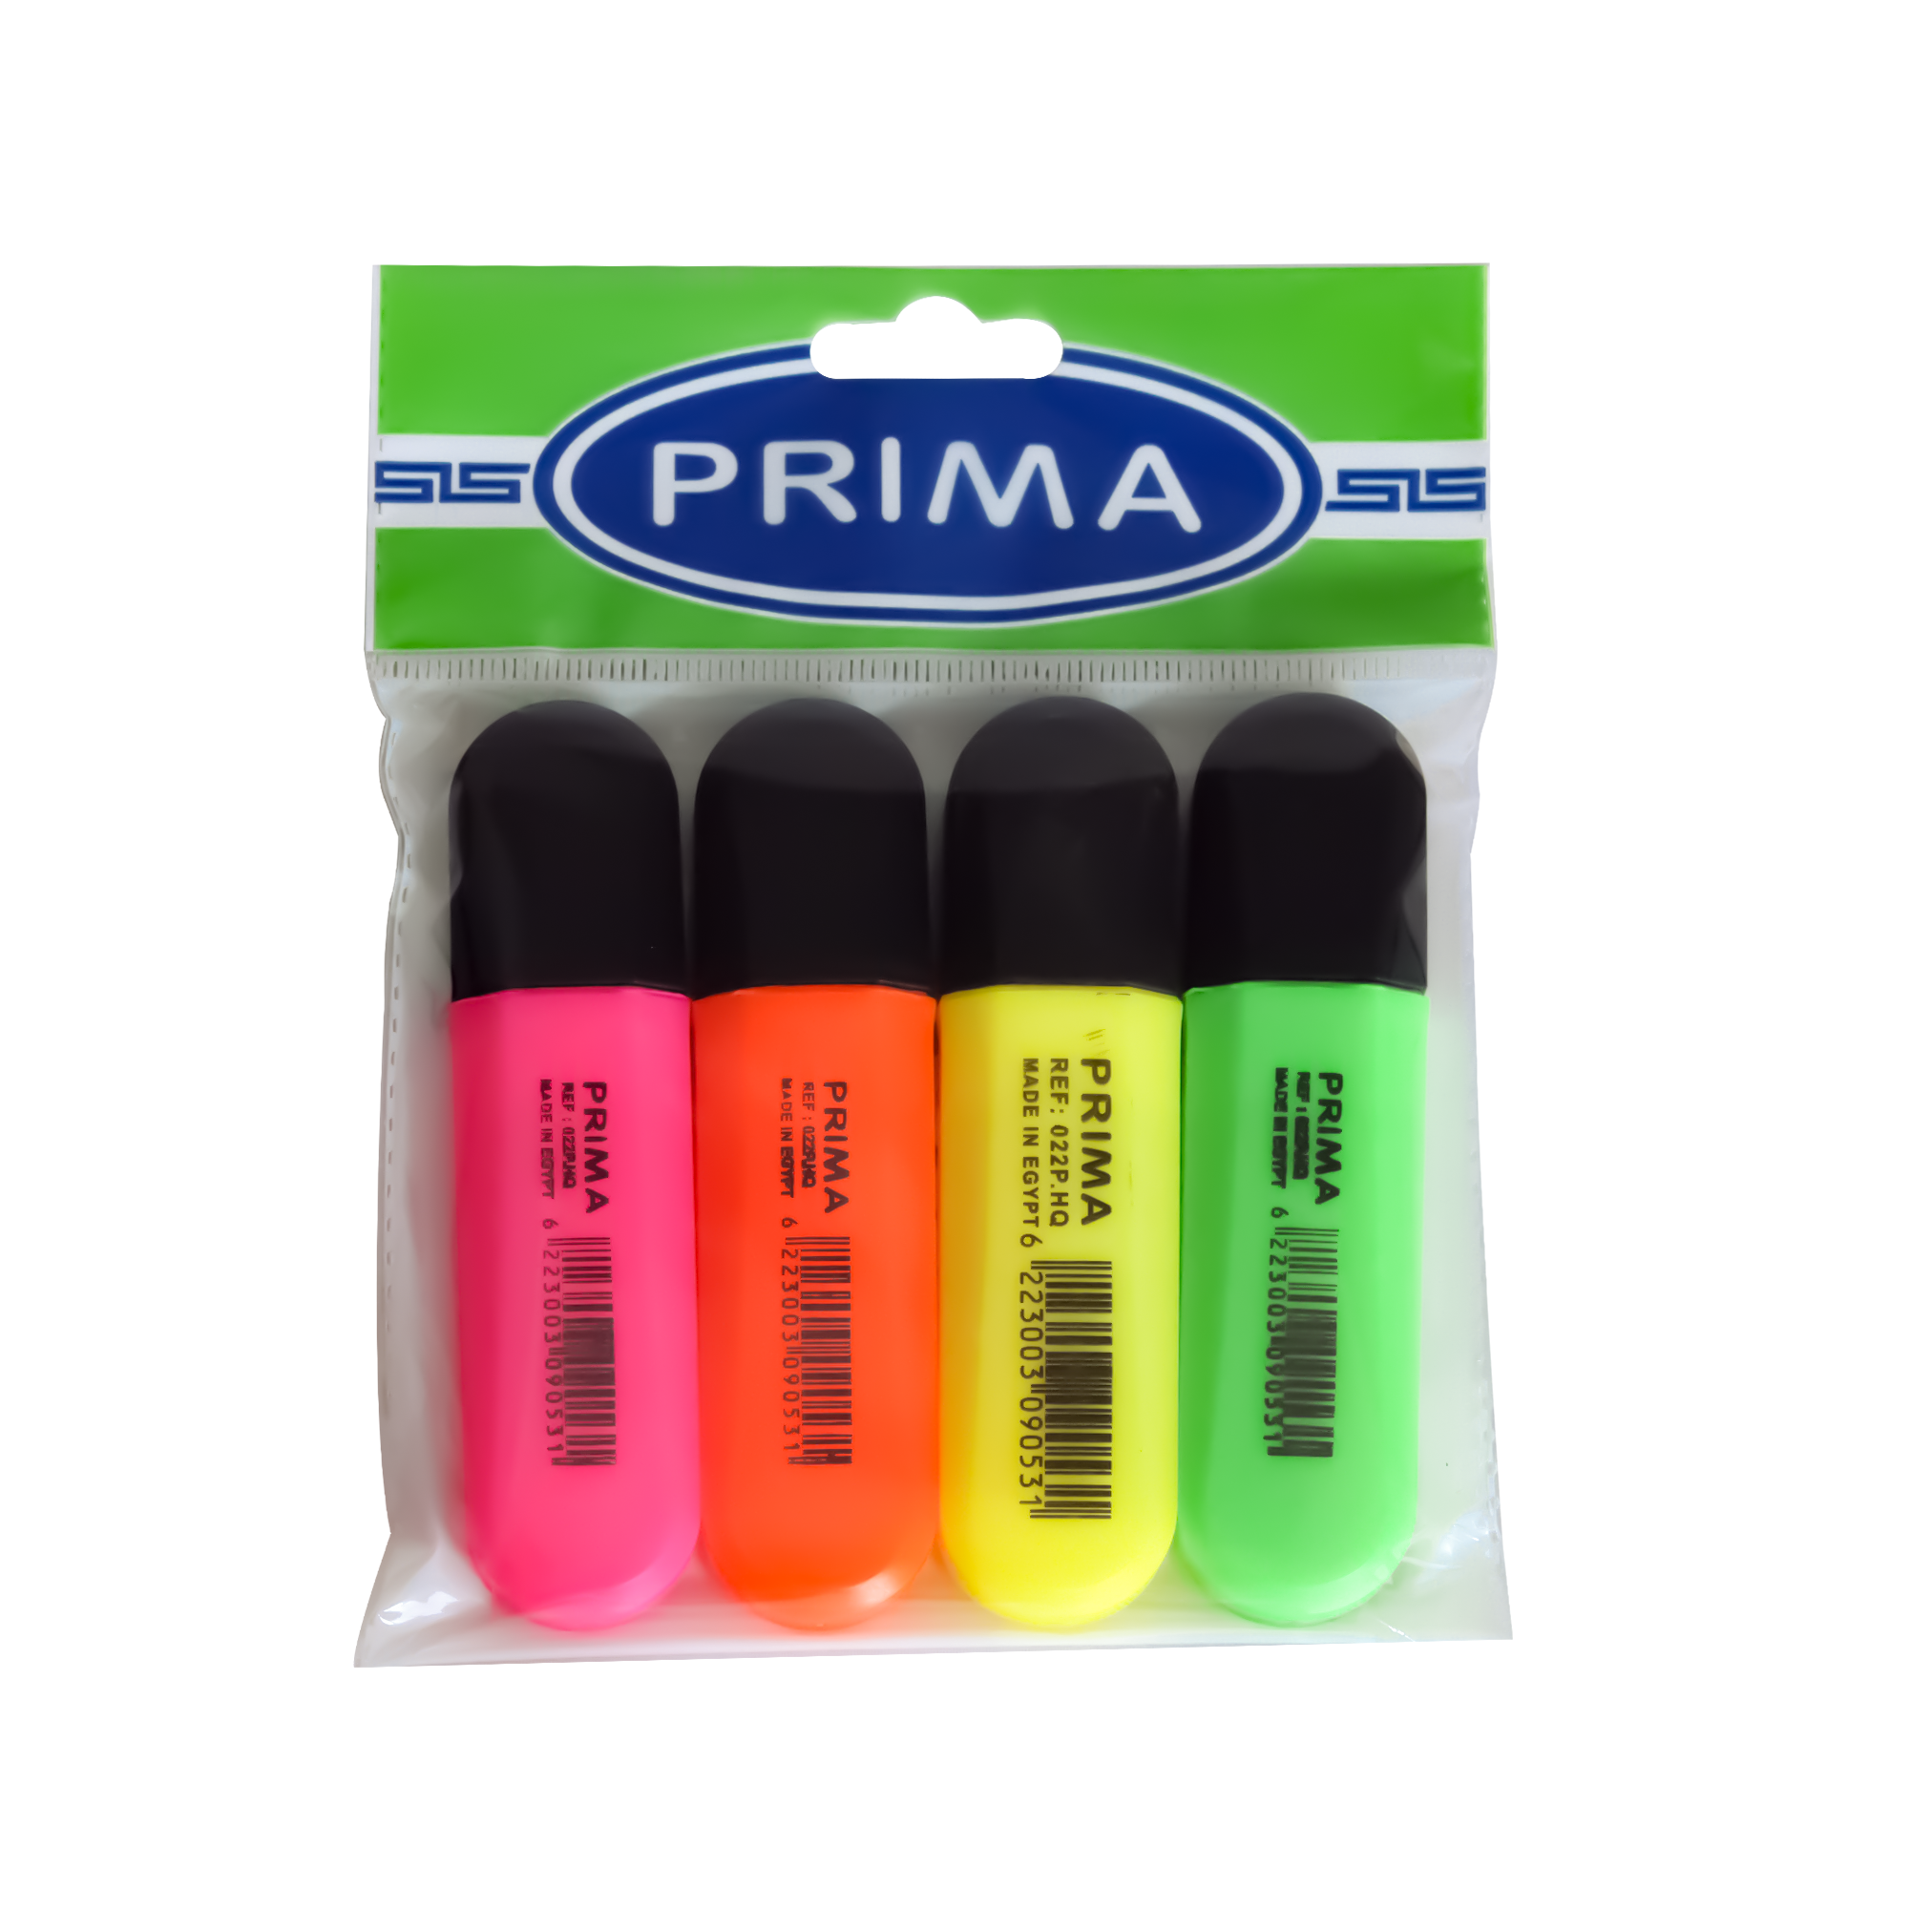 Prima Highlighter - phosphoric colors 4 Pcs